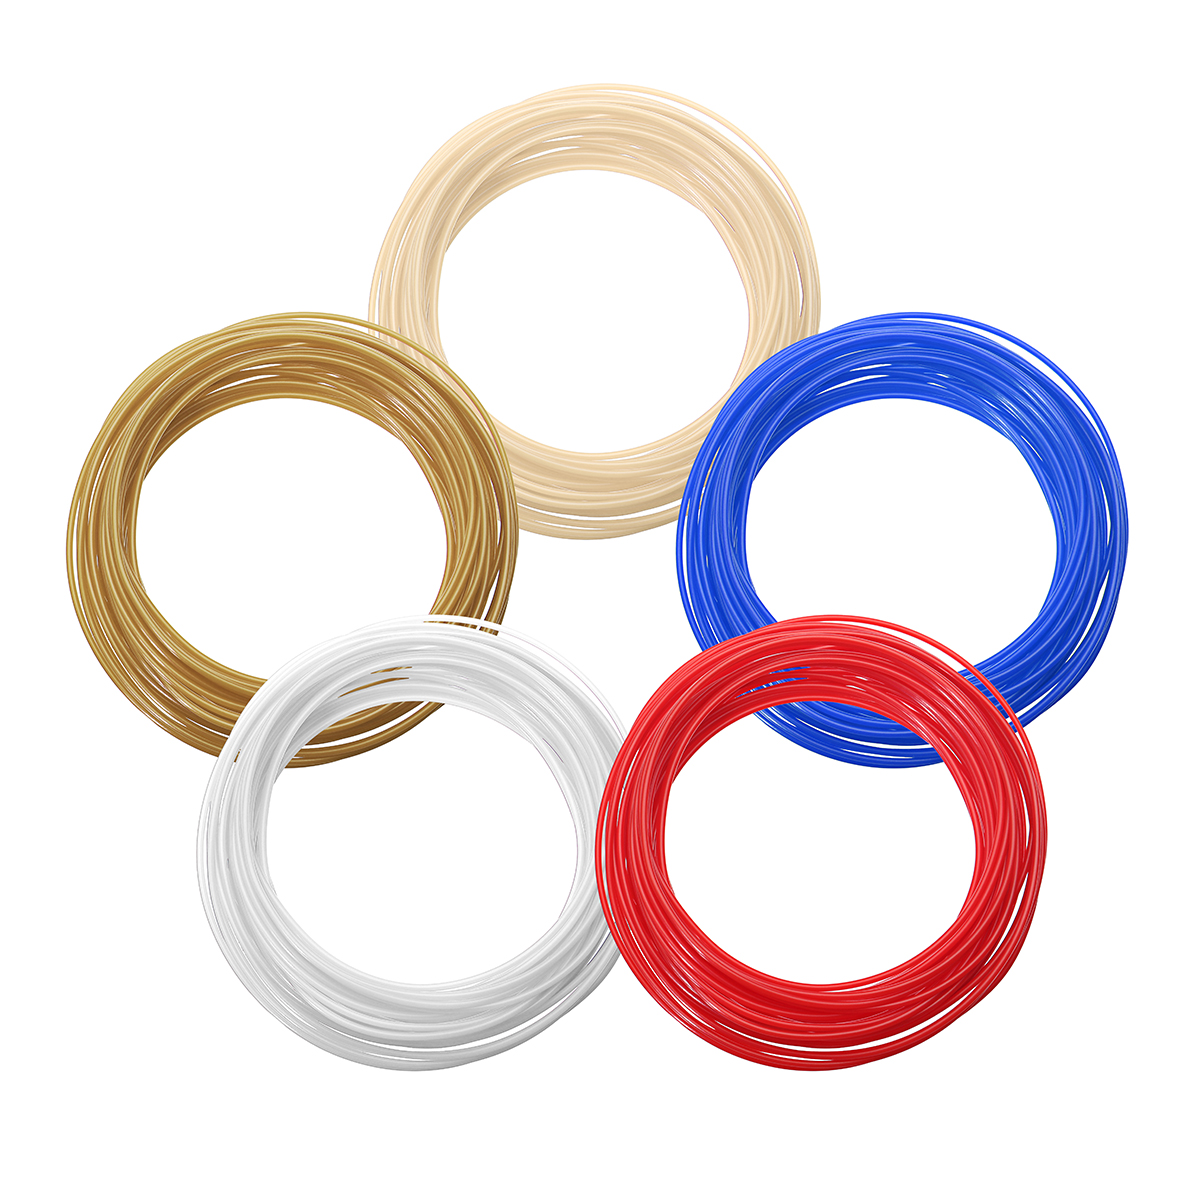 20 Colors/Pack 5/10m Length Per Color PLA 1.75mm Filament for 3D Printing Pen 0.4mm Nozzle 36